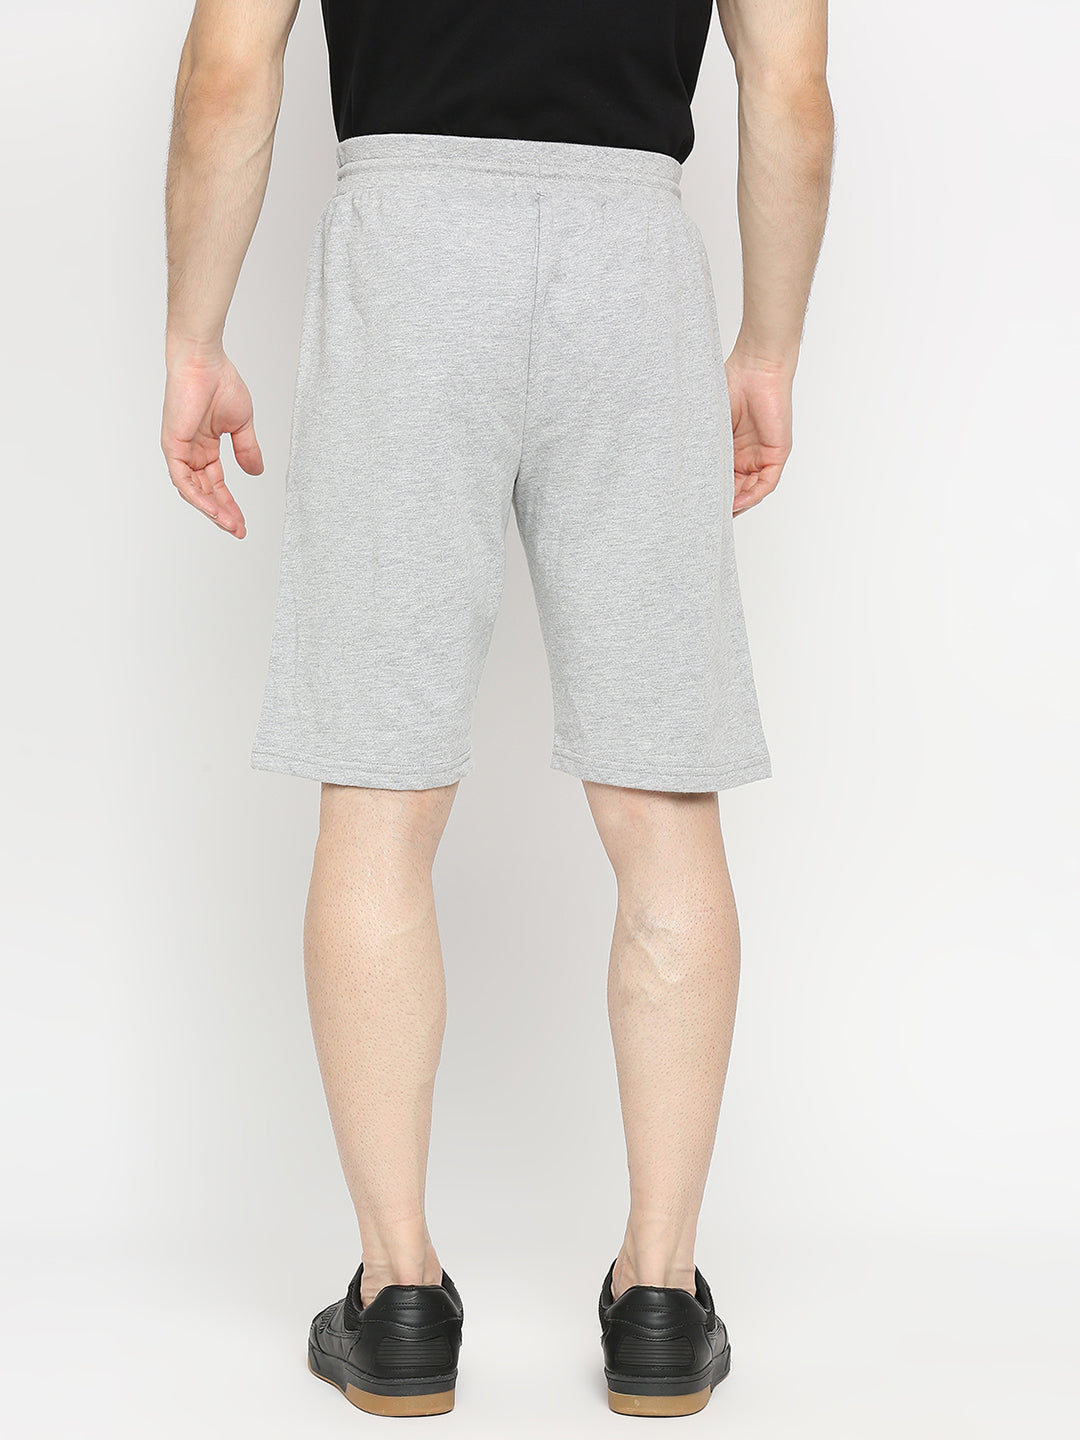 Men Grey Cotton Blend Shorts - Underjeans by Spykar